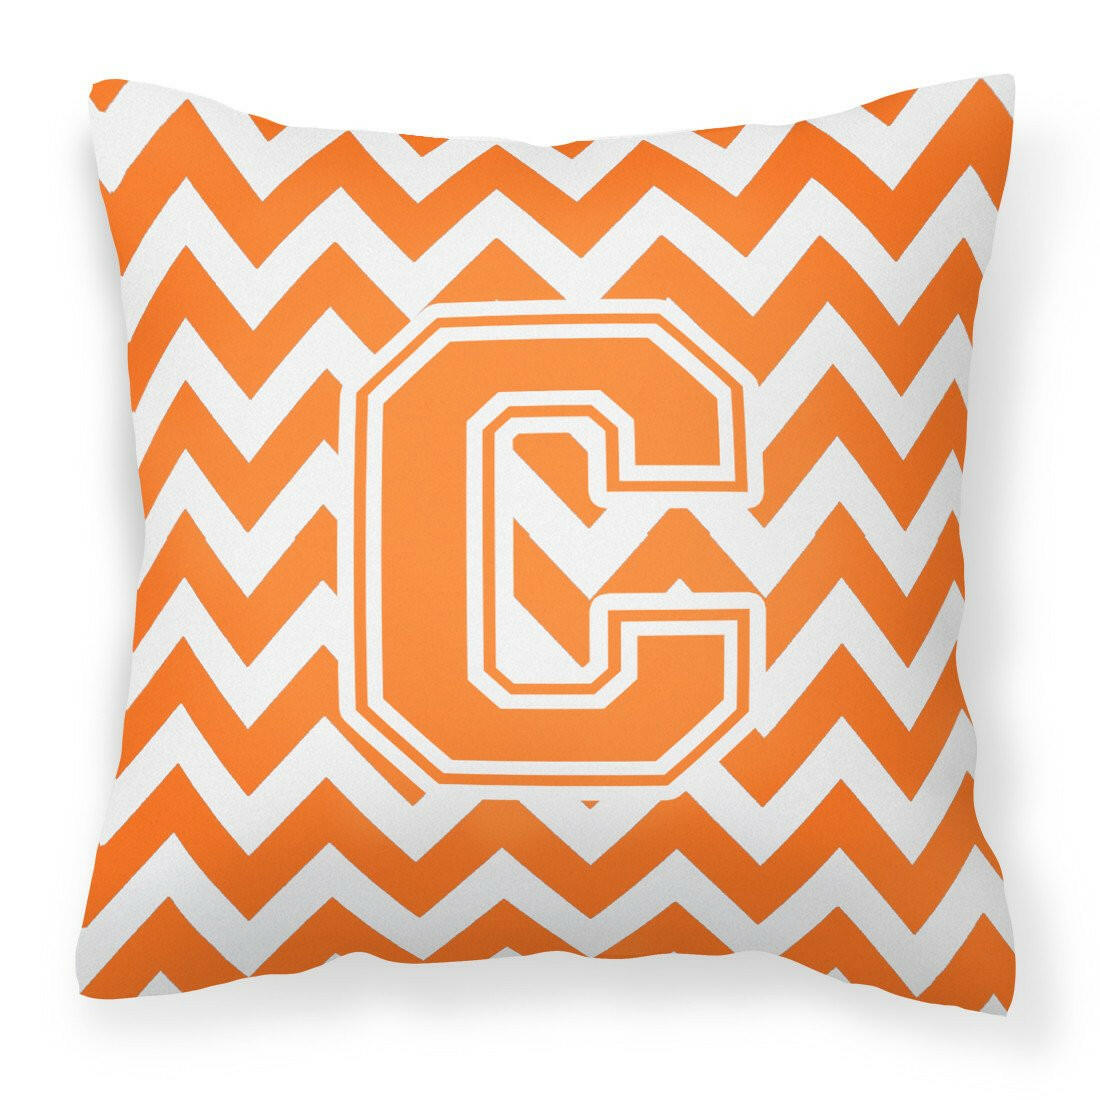 Letter C Chevron Orange and White Fabric Decorative Pillow CJ1046-CPW1414 by Caroline's Treasures